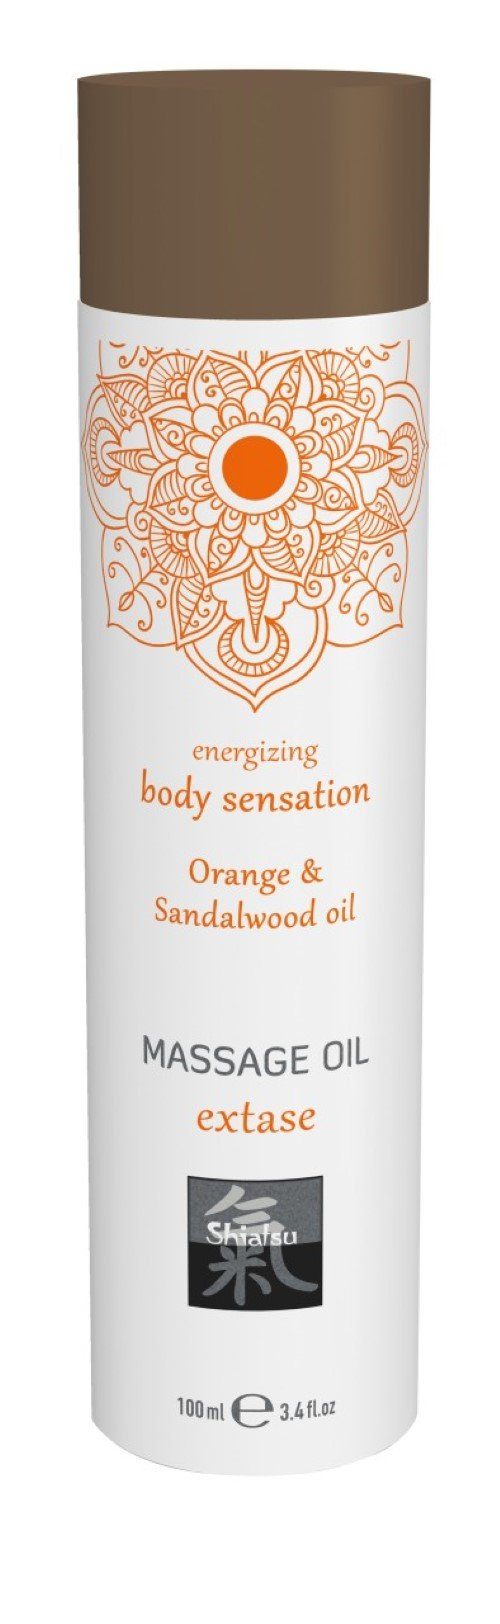 100ml Massage extase SHIATSU & - Massageöl & Gleit- oil Orange Shiatsu ml HOT Sandalwood 100